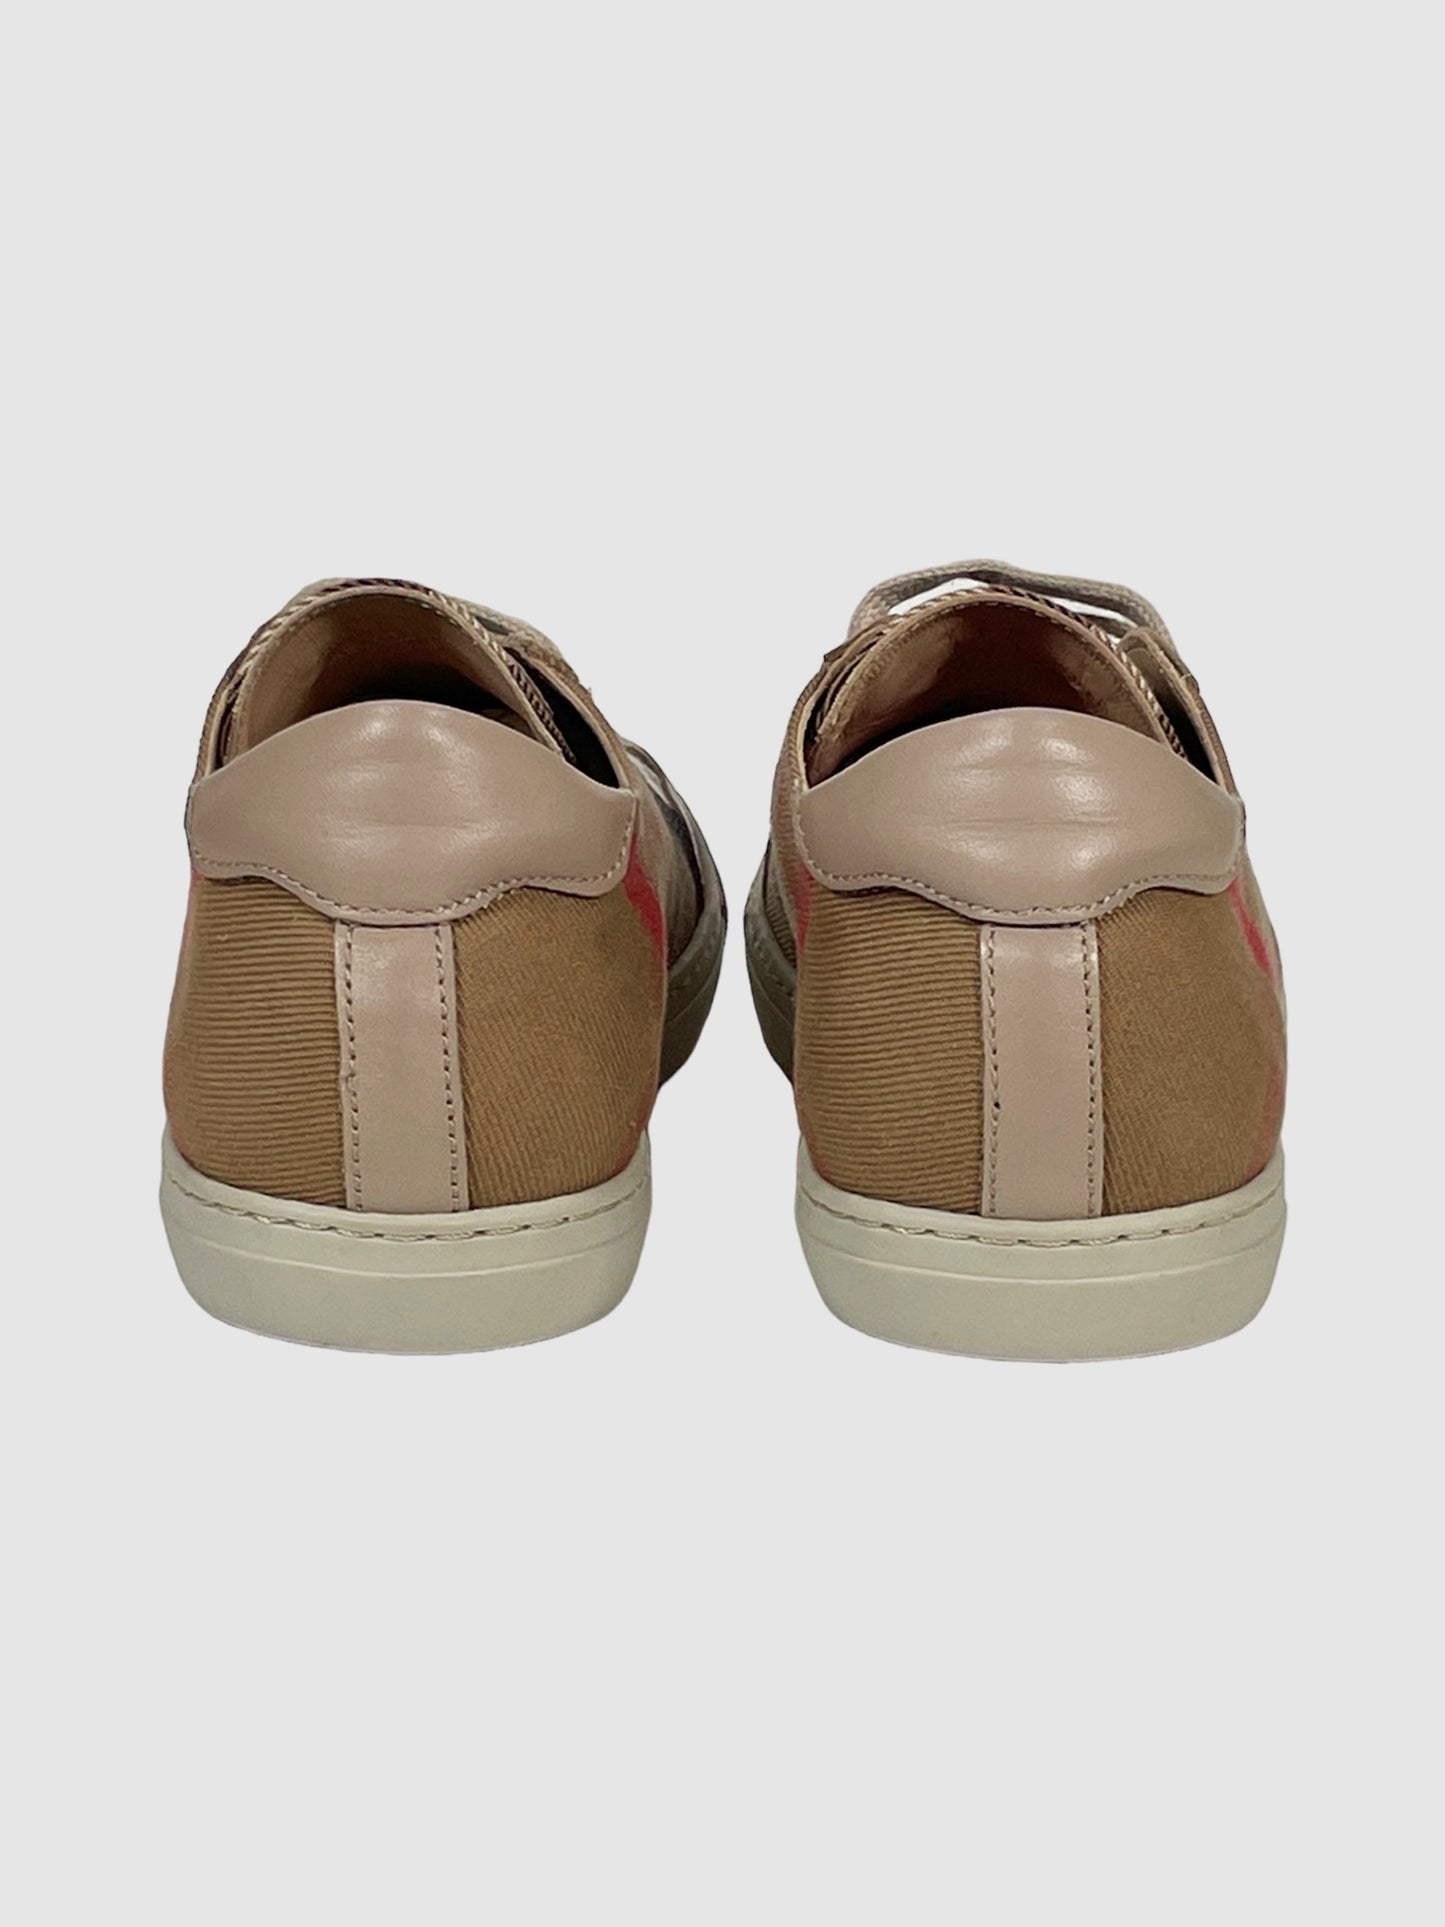 Leather Nova Check Sneakers - Size 36